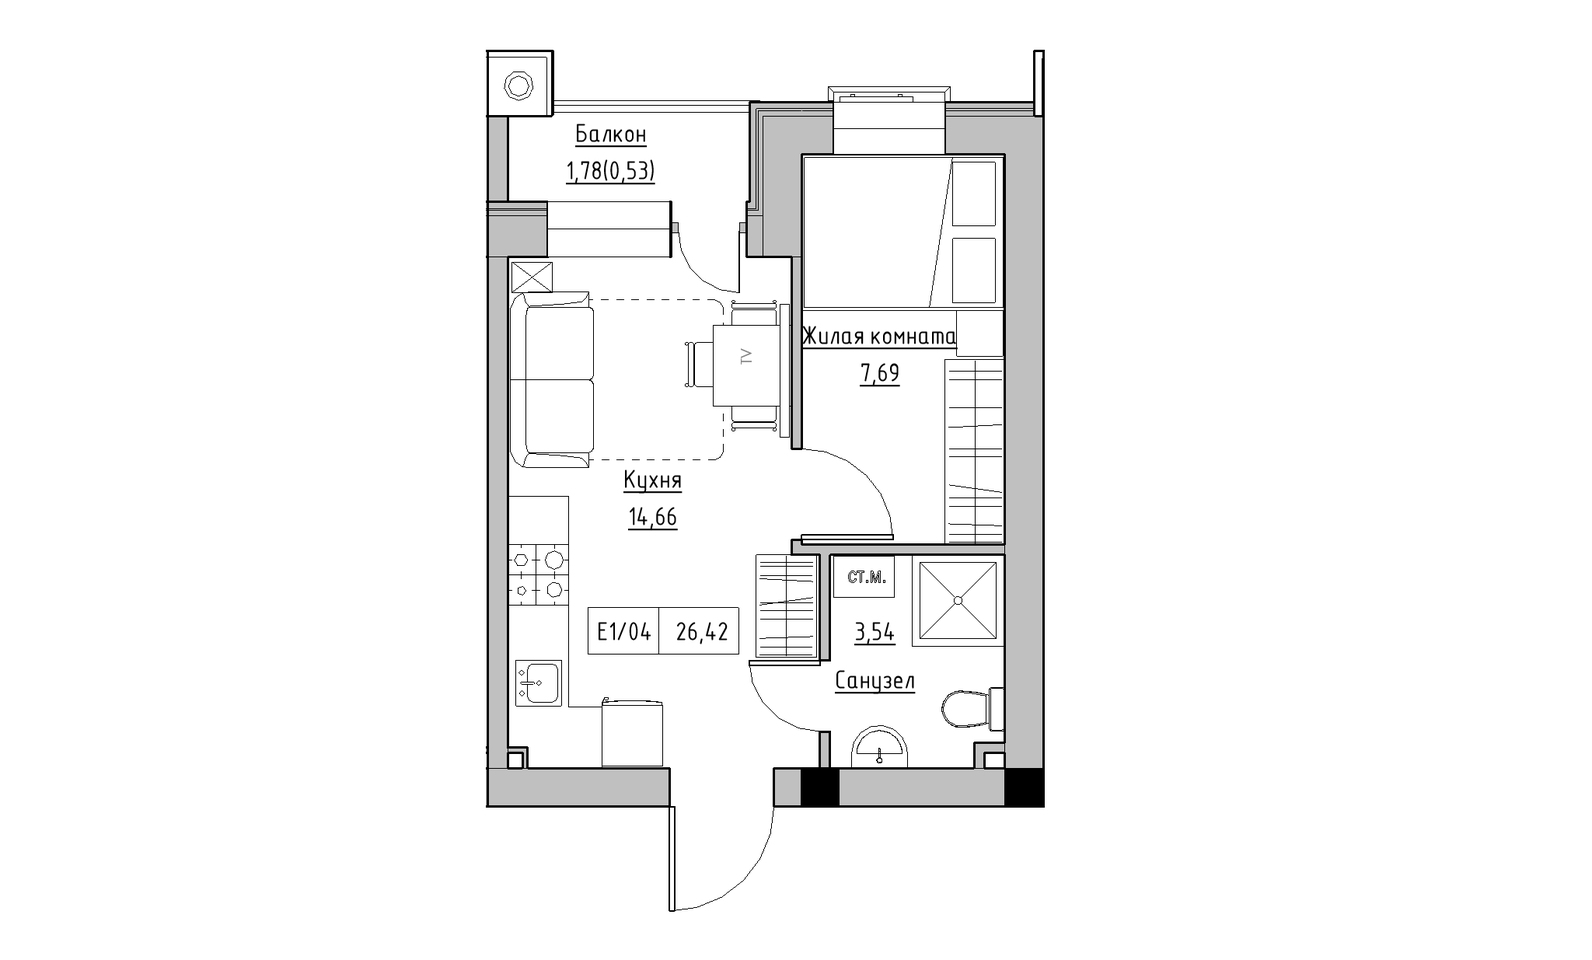 Planning 1-rm flats area 26.42m2, KS-014-05/0008.